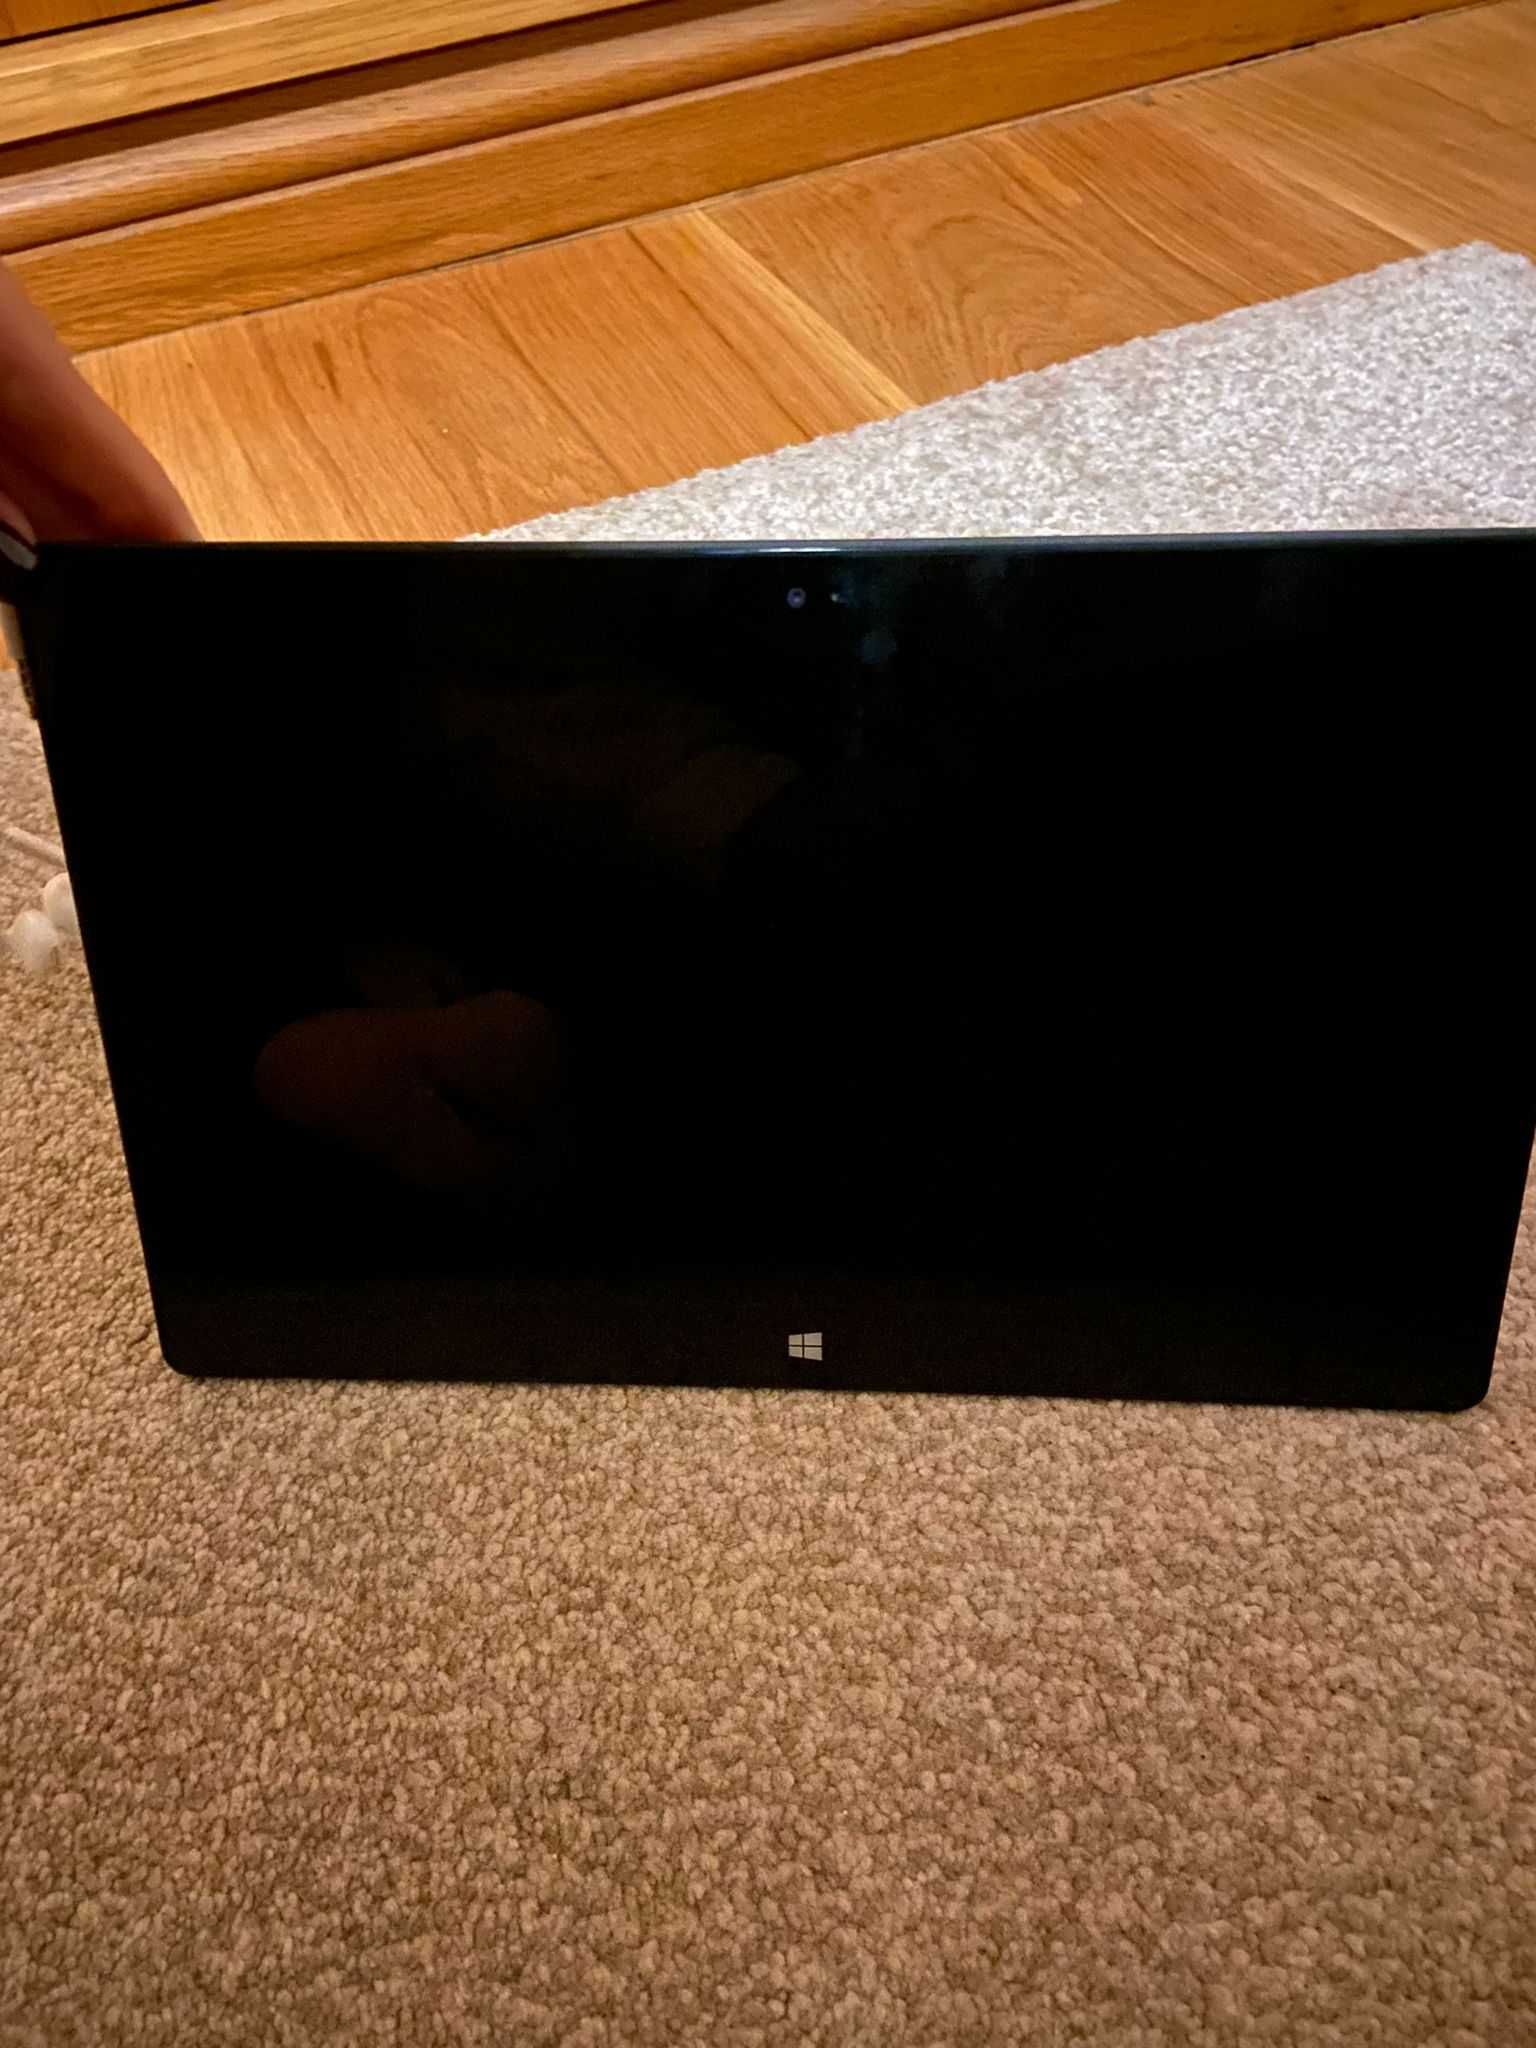 Microsoft Surface RT 64GB B